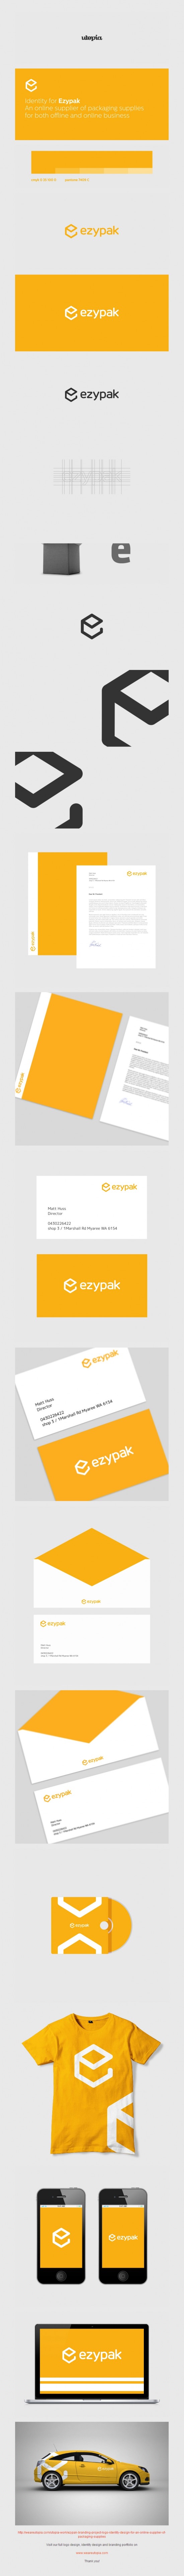 Ezypak logo and corporate identity design by Utopia Branding Agency2